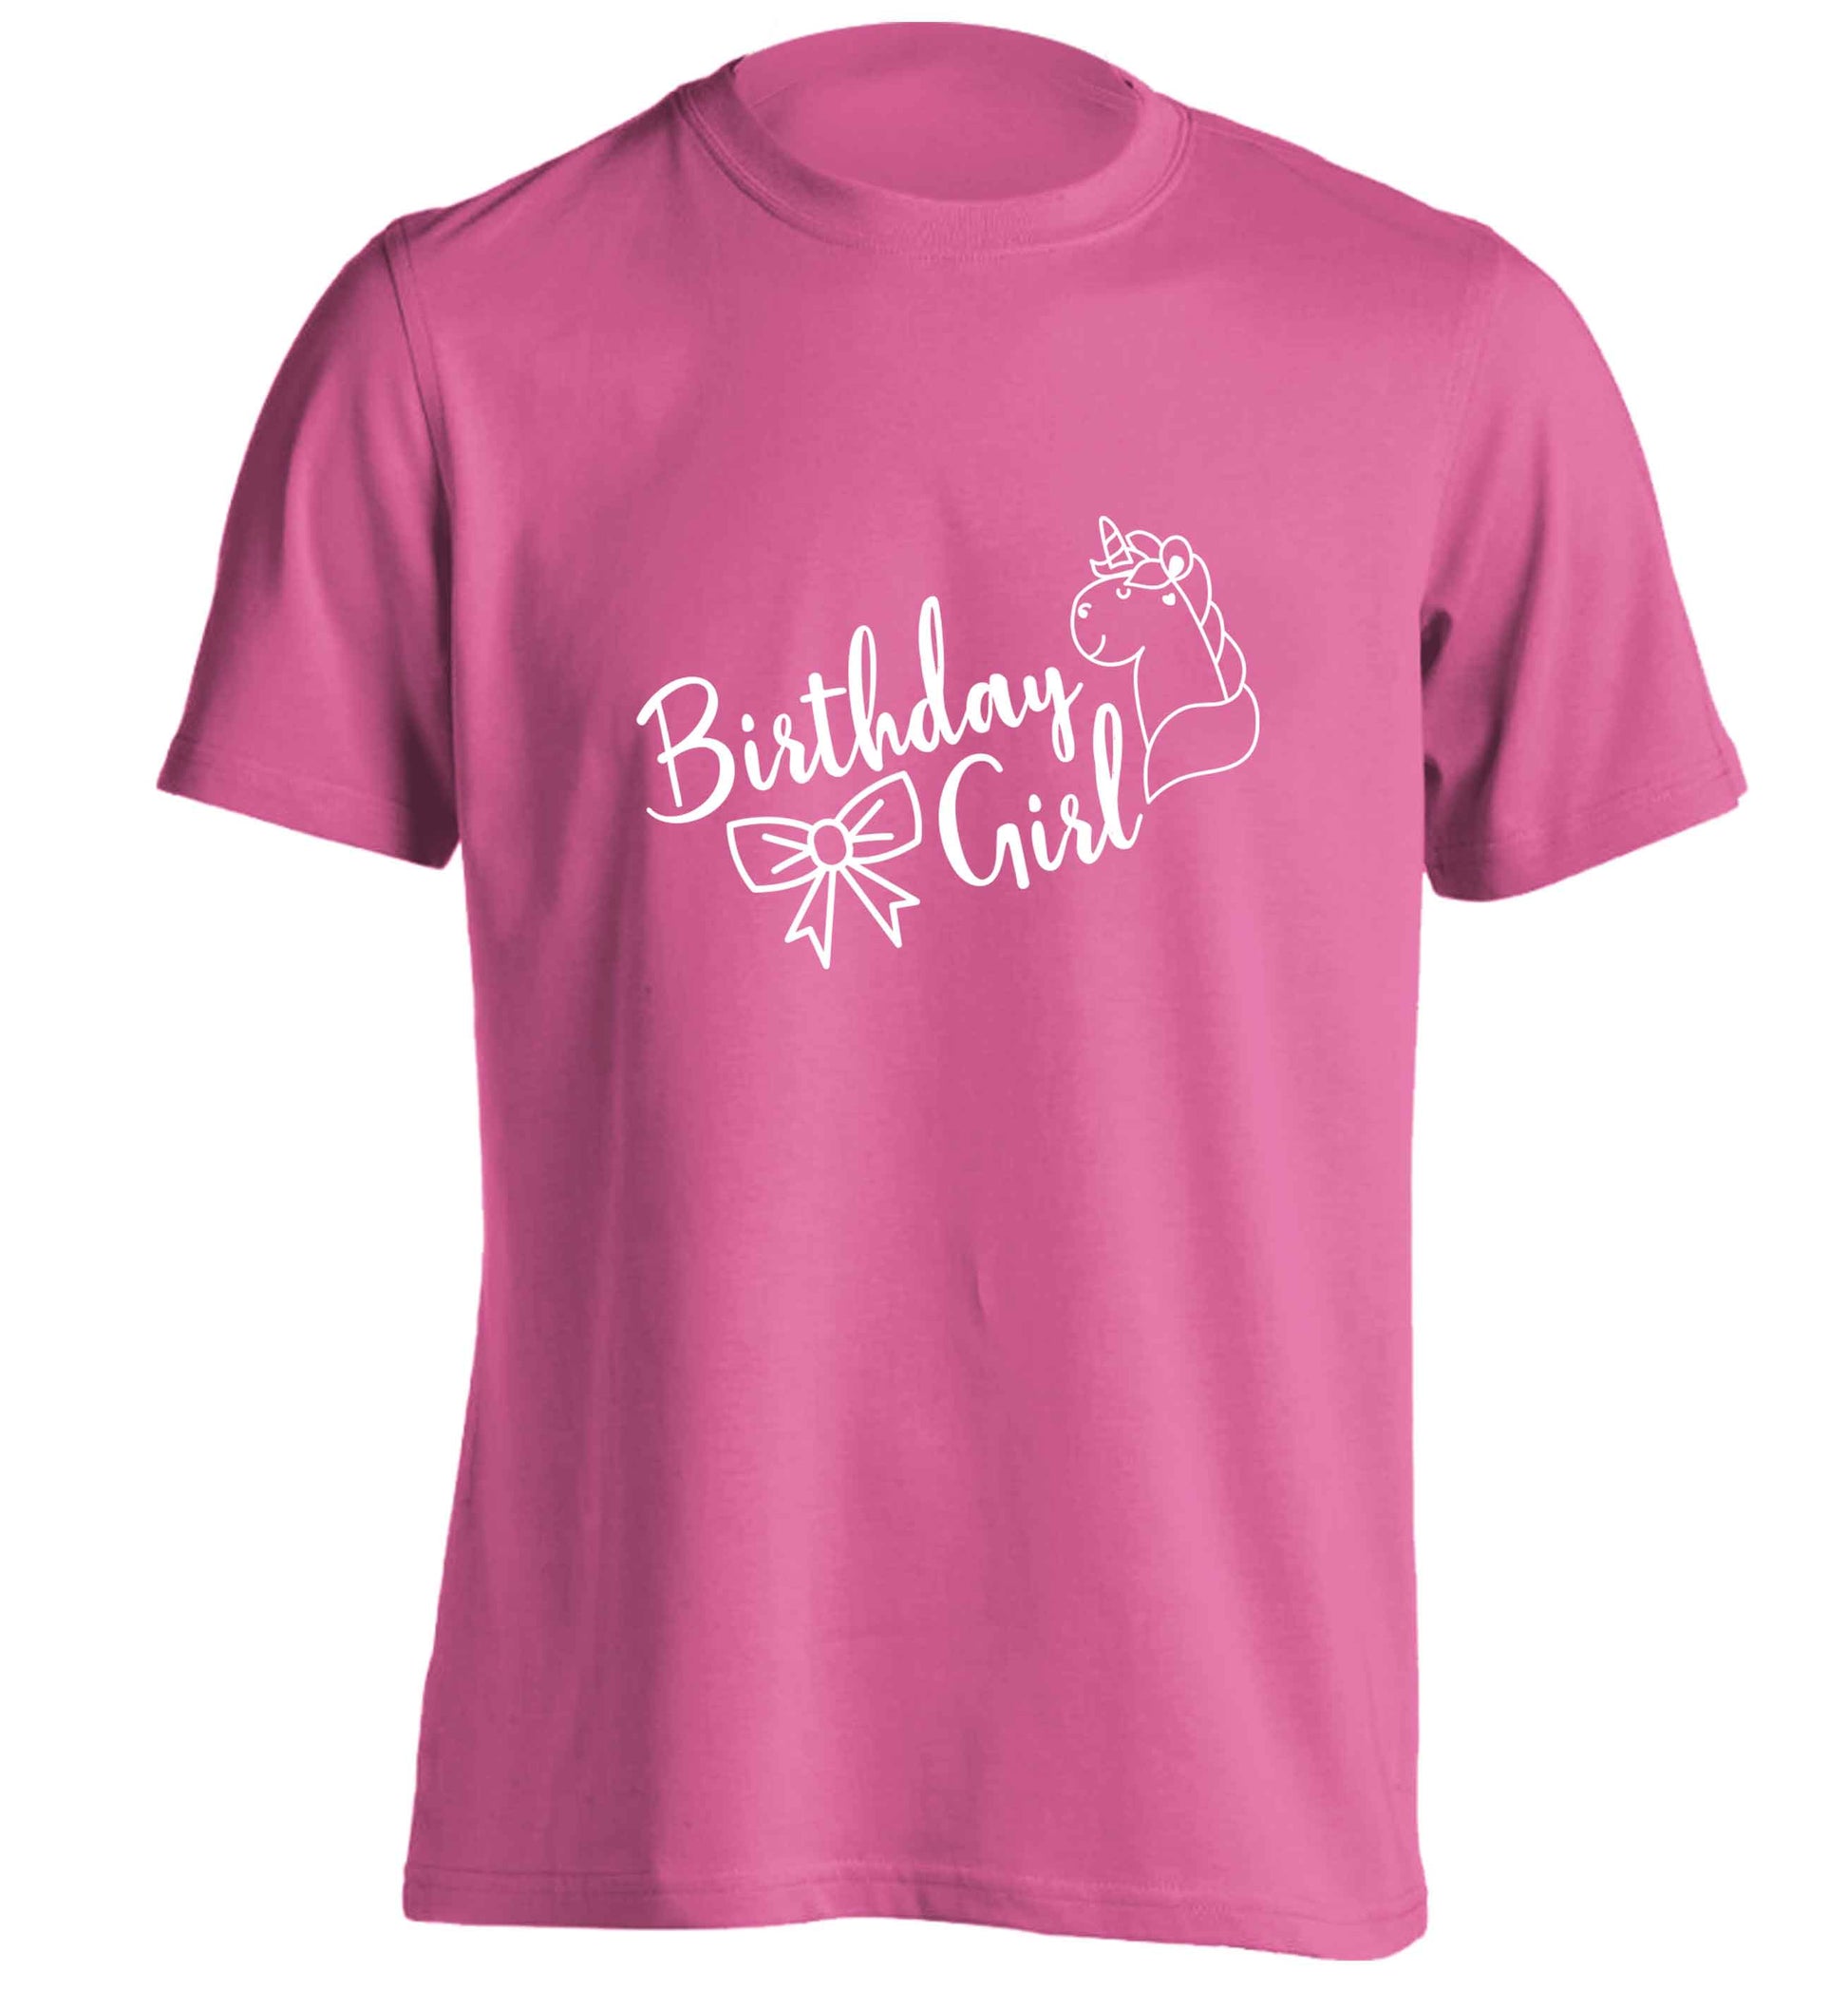 Birthday girl adults unisex pink Tshirt 2XL